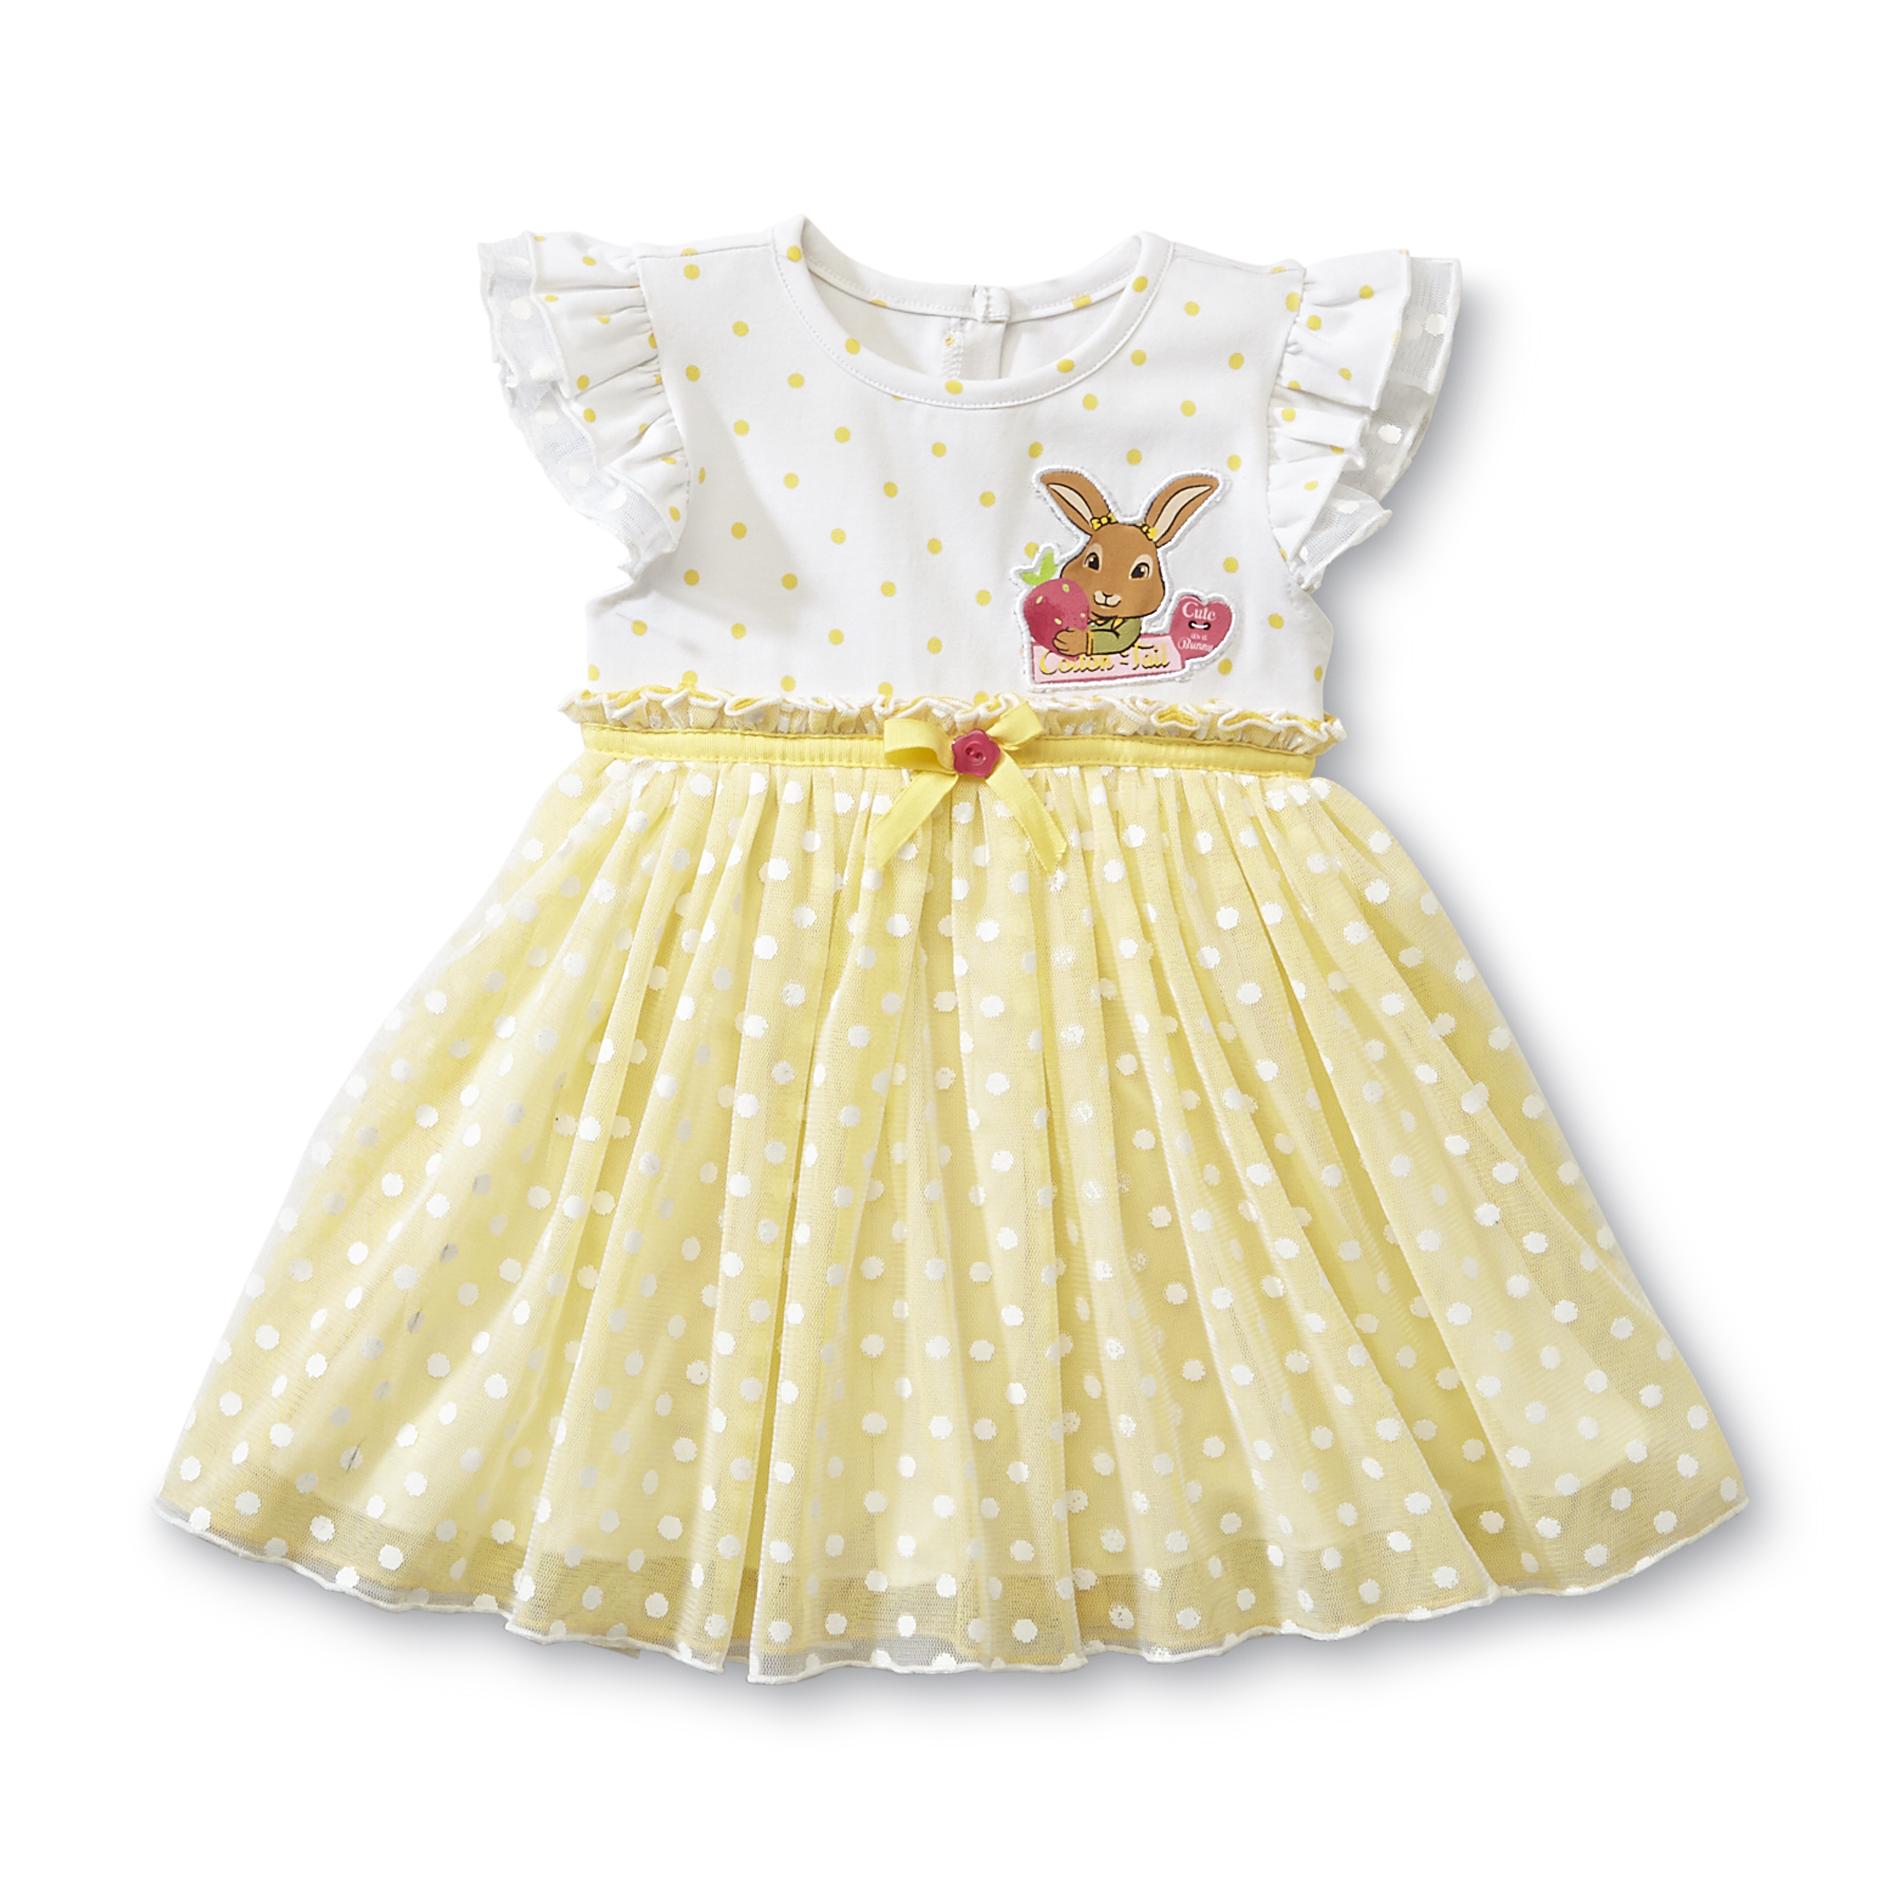 Beatrix Potter Peter Cotton Tail Infant Girl's Dress